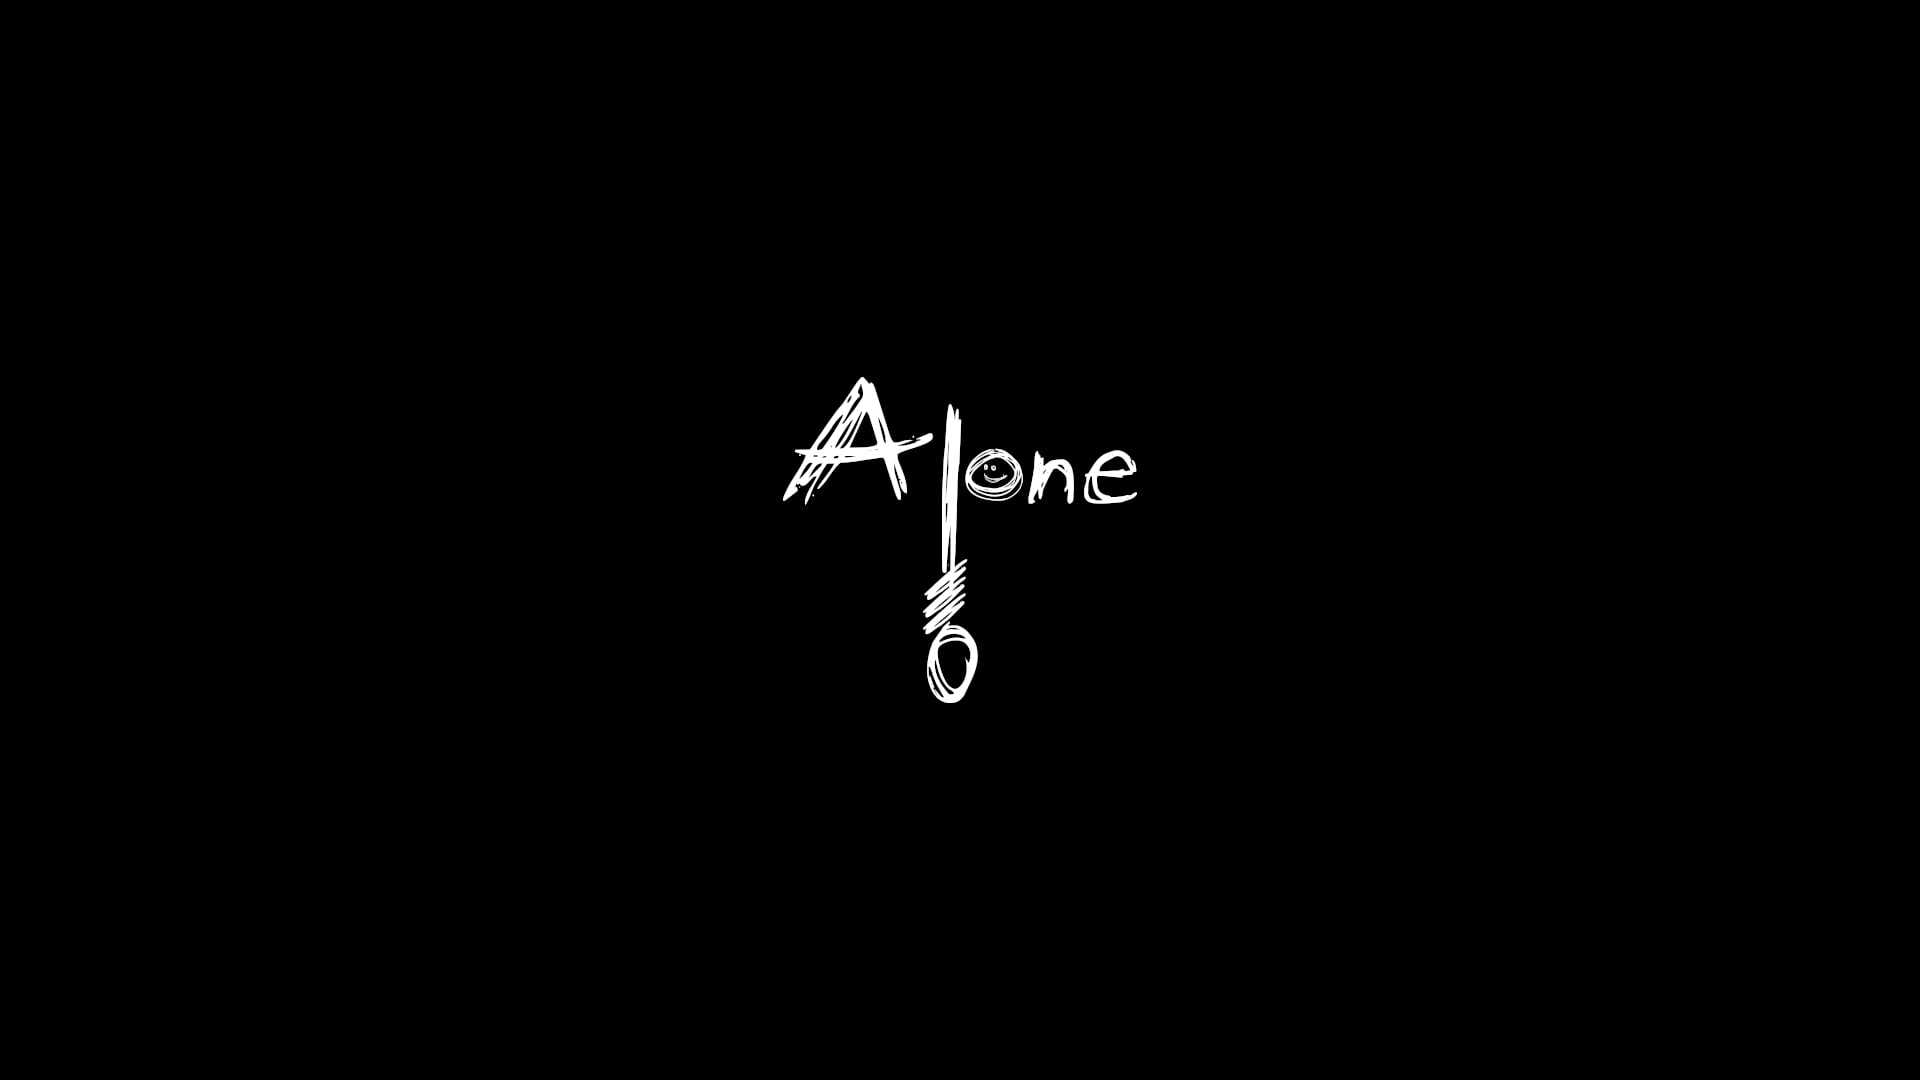 forever alone sad